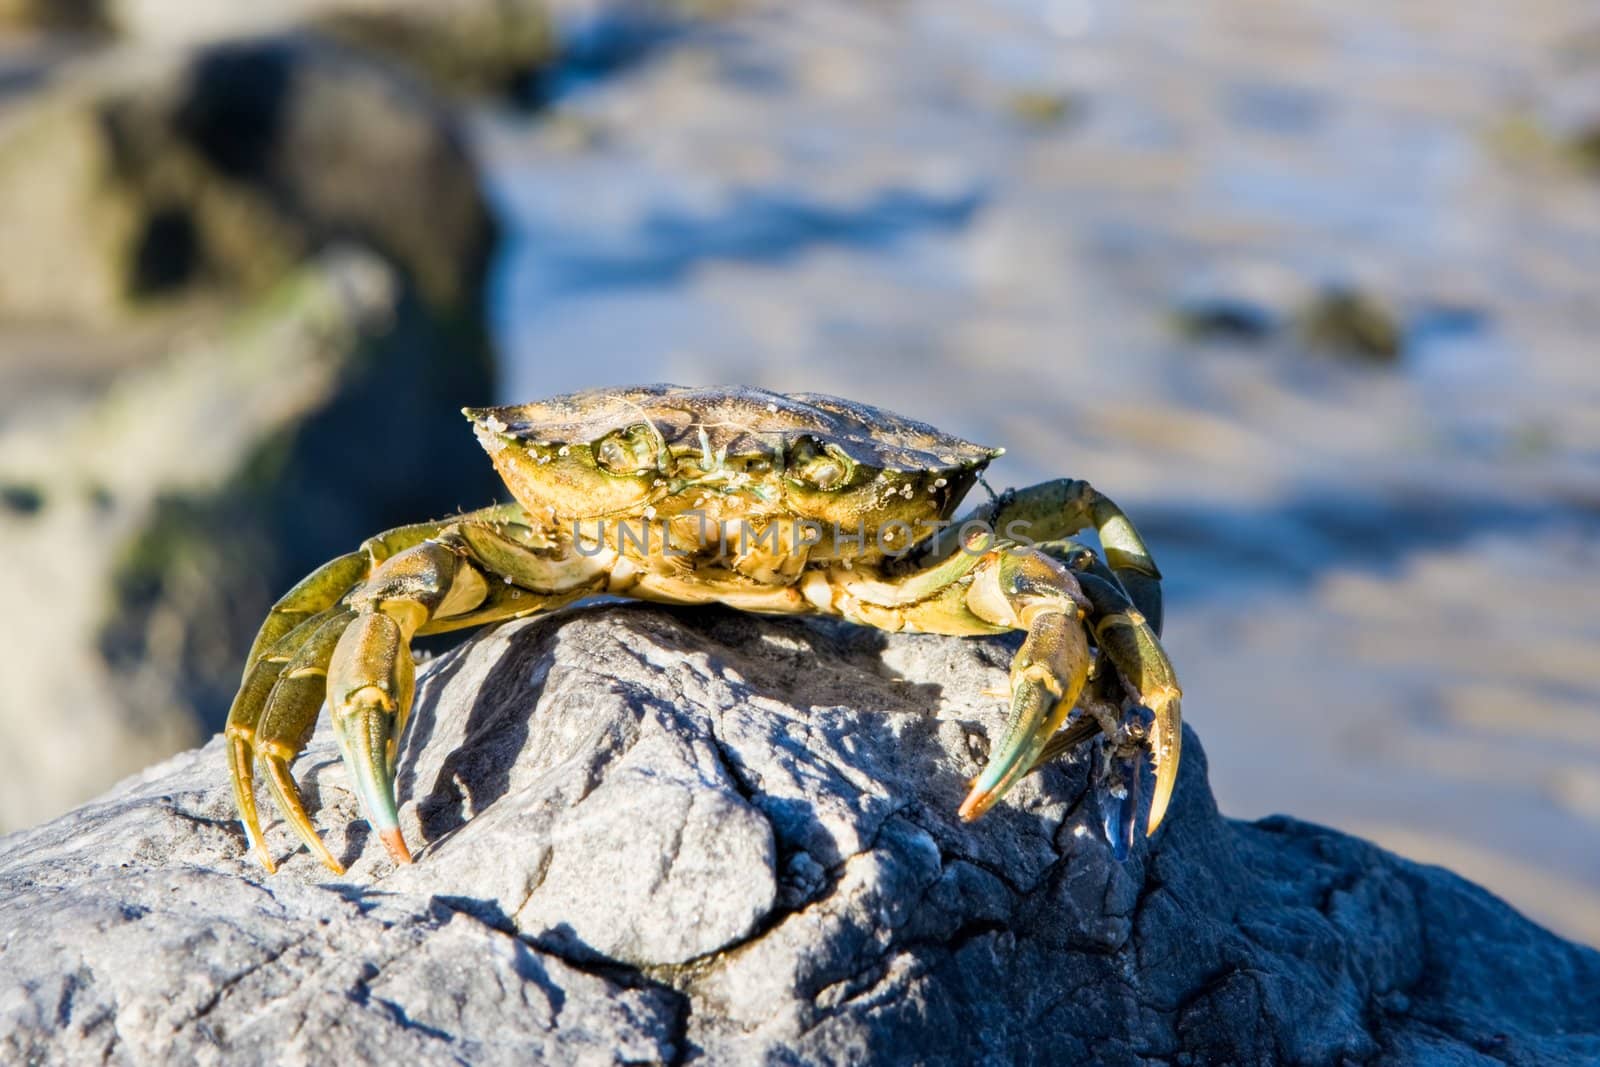 A crab on a rock at the ocean shoreline.